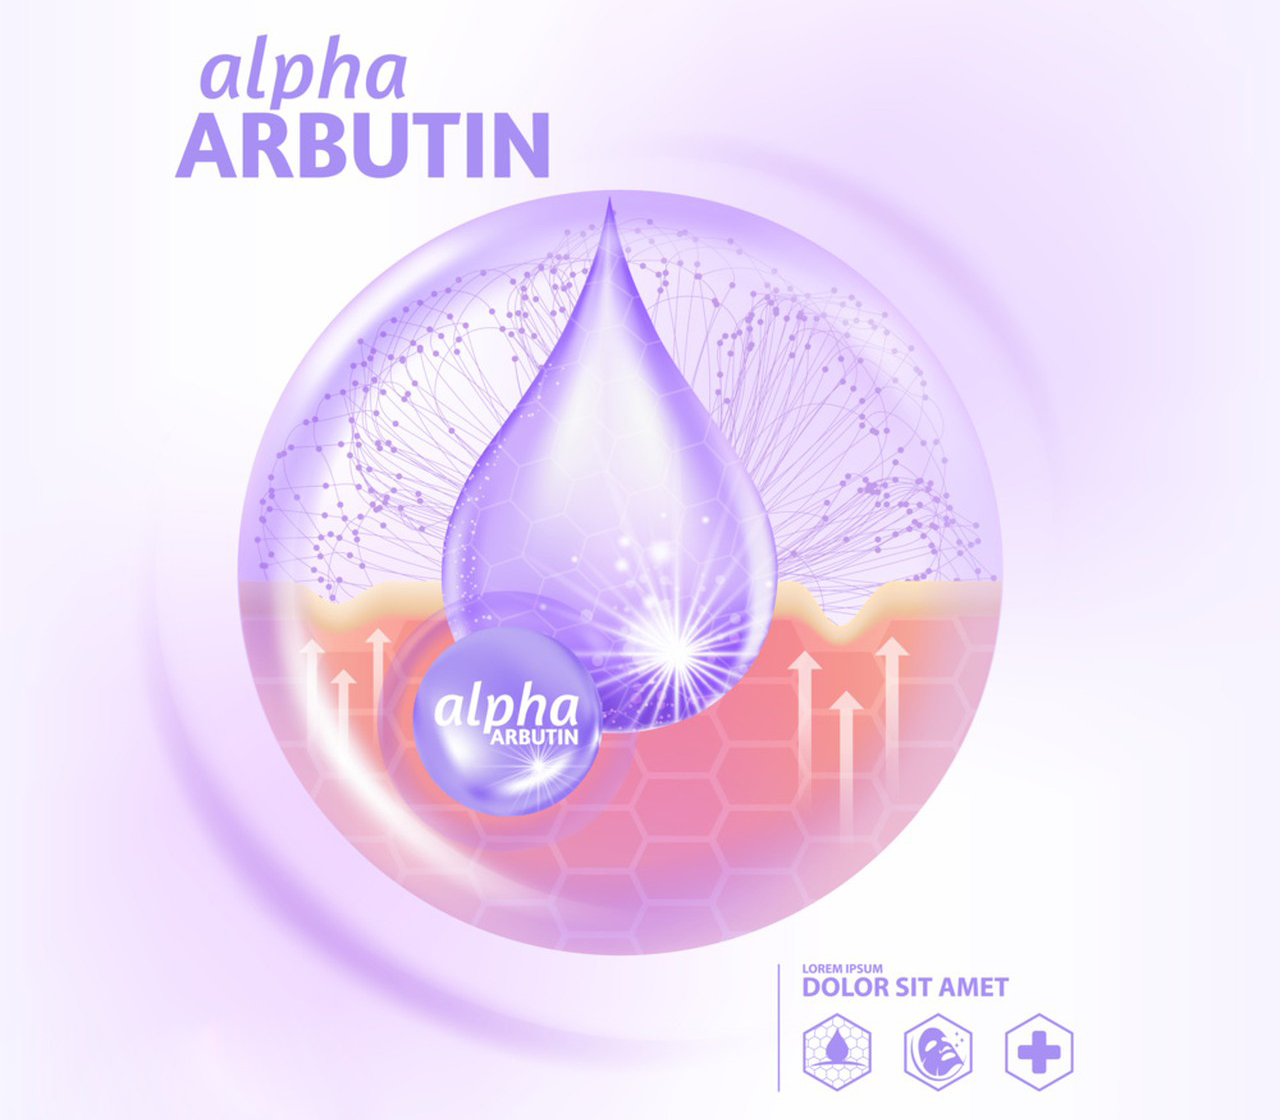 The application of Alpha Arbutin-Xi'an Lyphar Biotech Co., Ltd